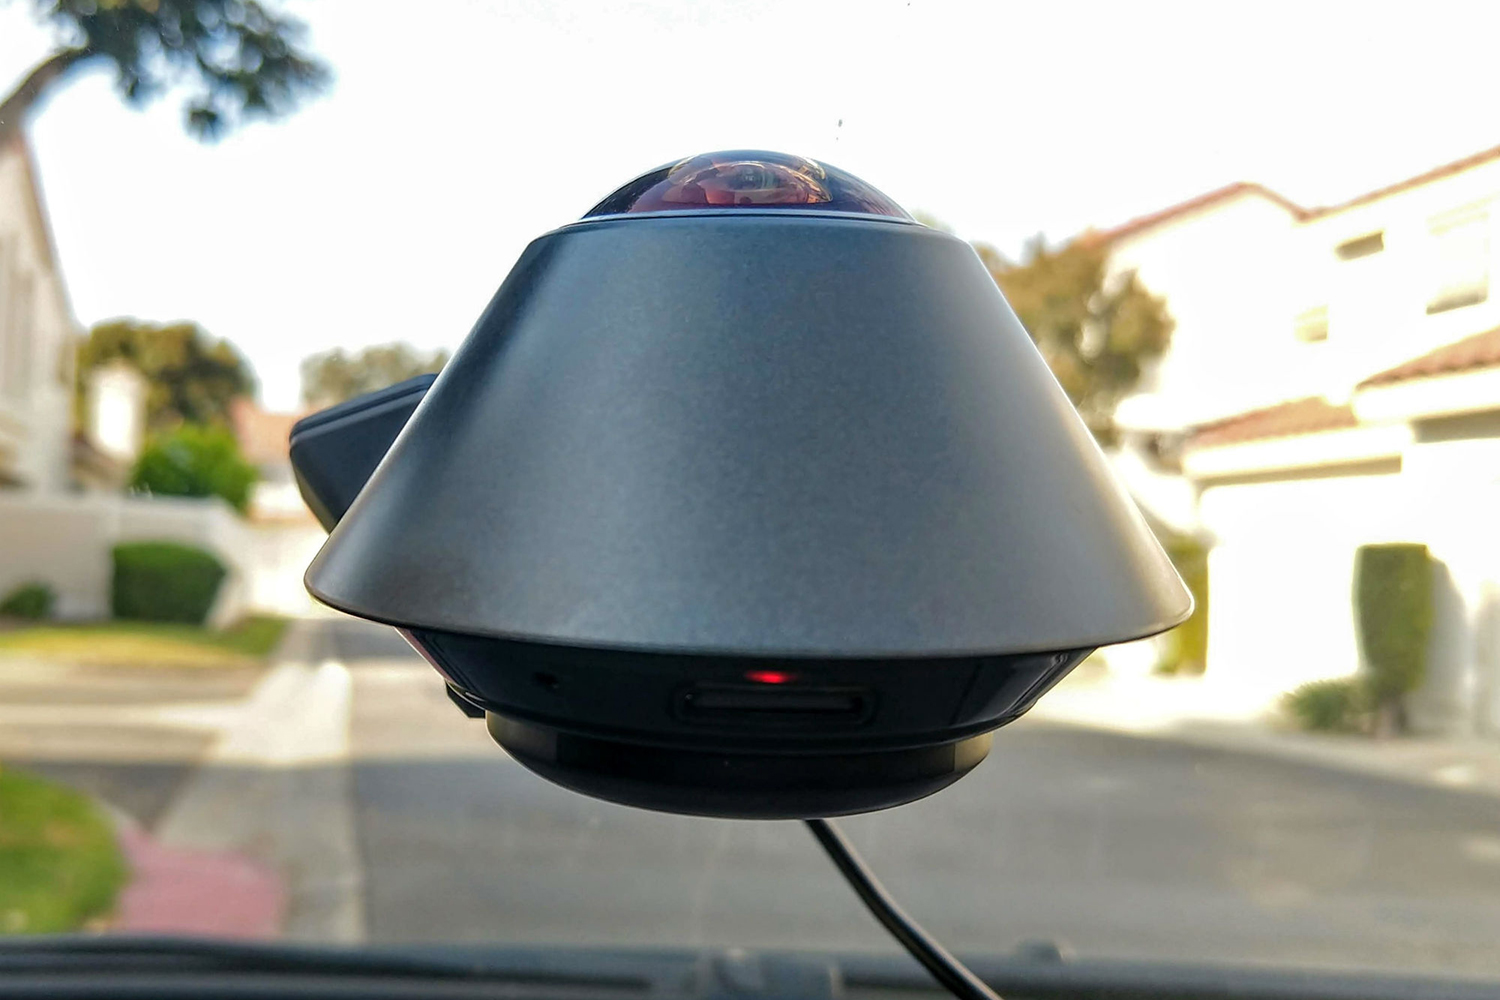 Waylens Secure360 WiFi Car Security Dash Camera Review | Digital